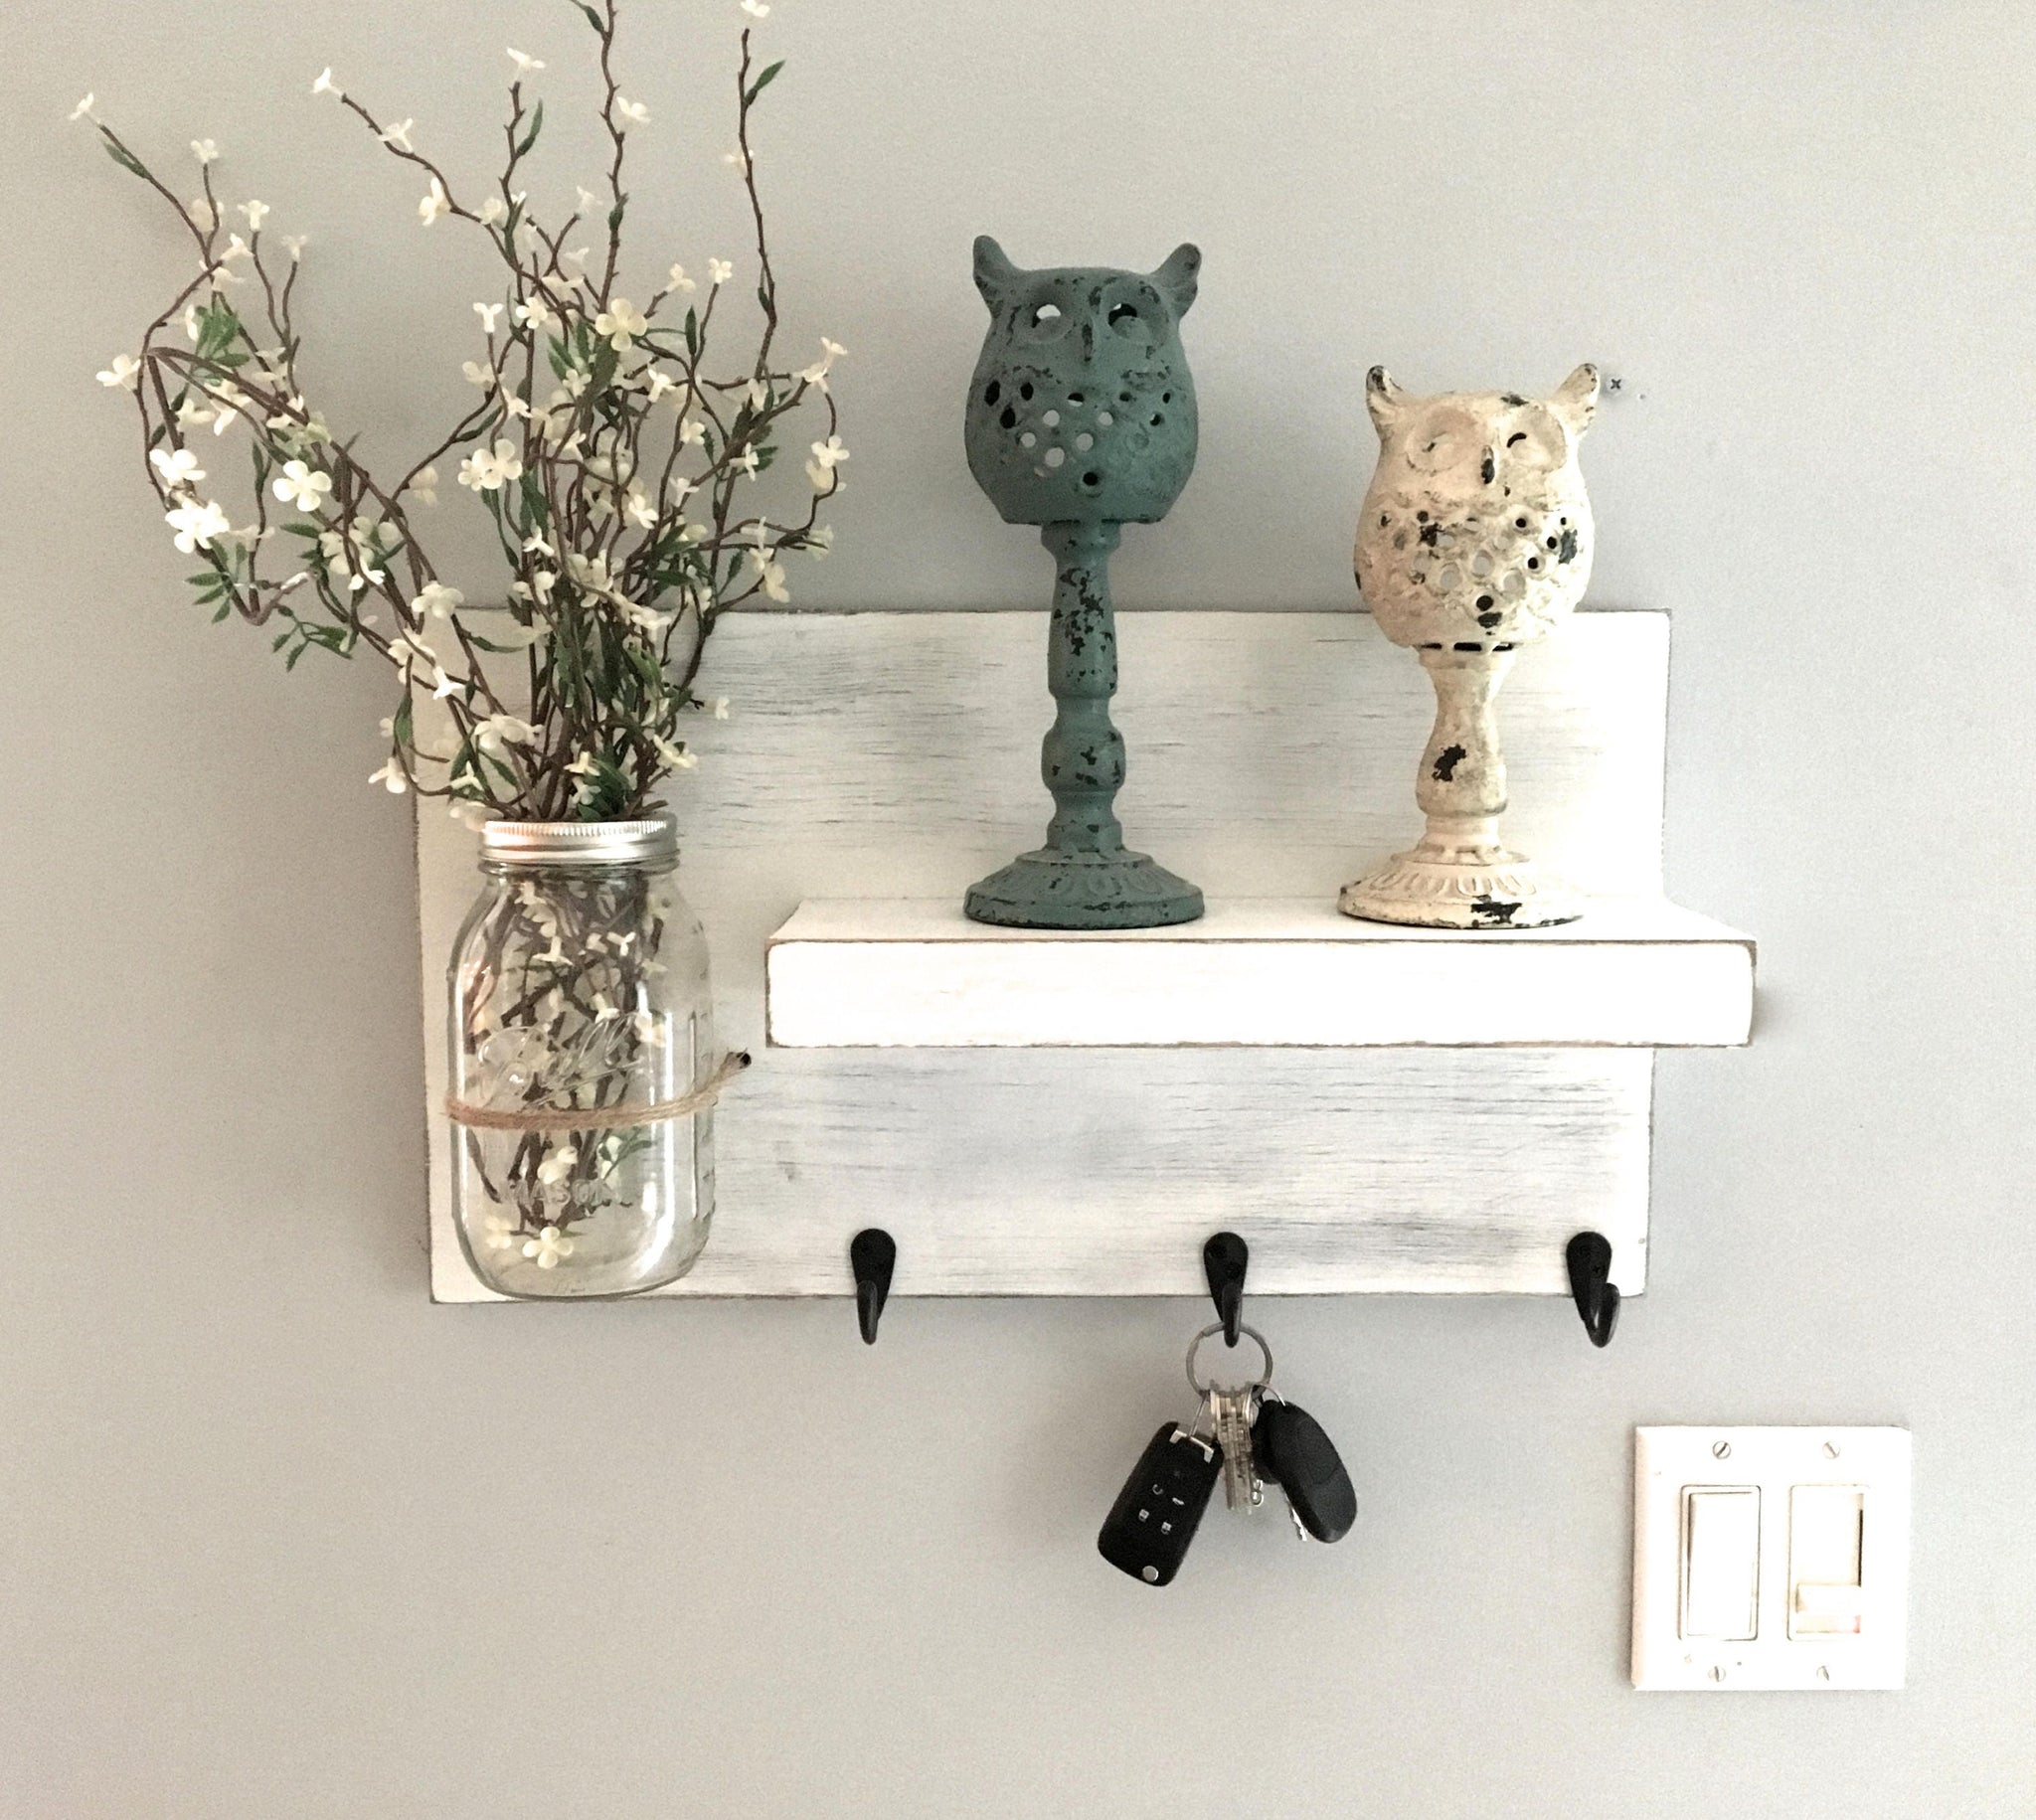 entryway shelf, key holder, wall vase, shelf with hooks, kitchen shelf, farmhouse, rustic shelf, reclaimed wood, mason jar wall vase, white